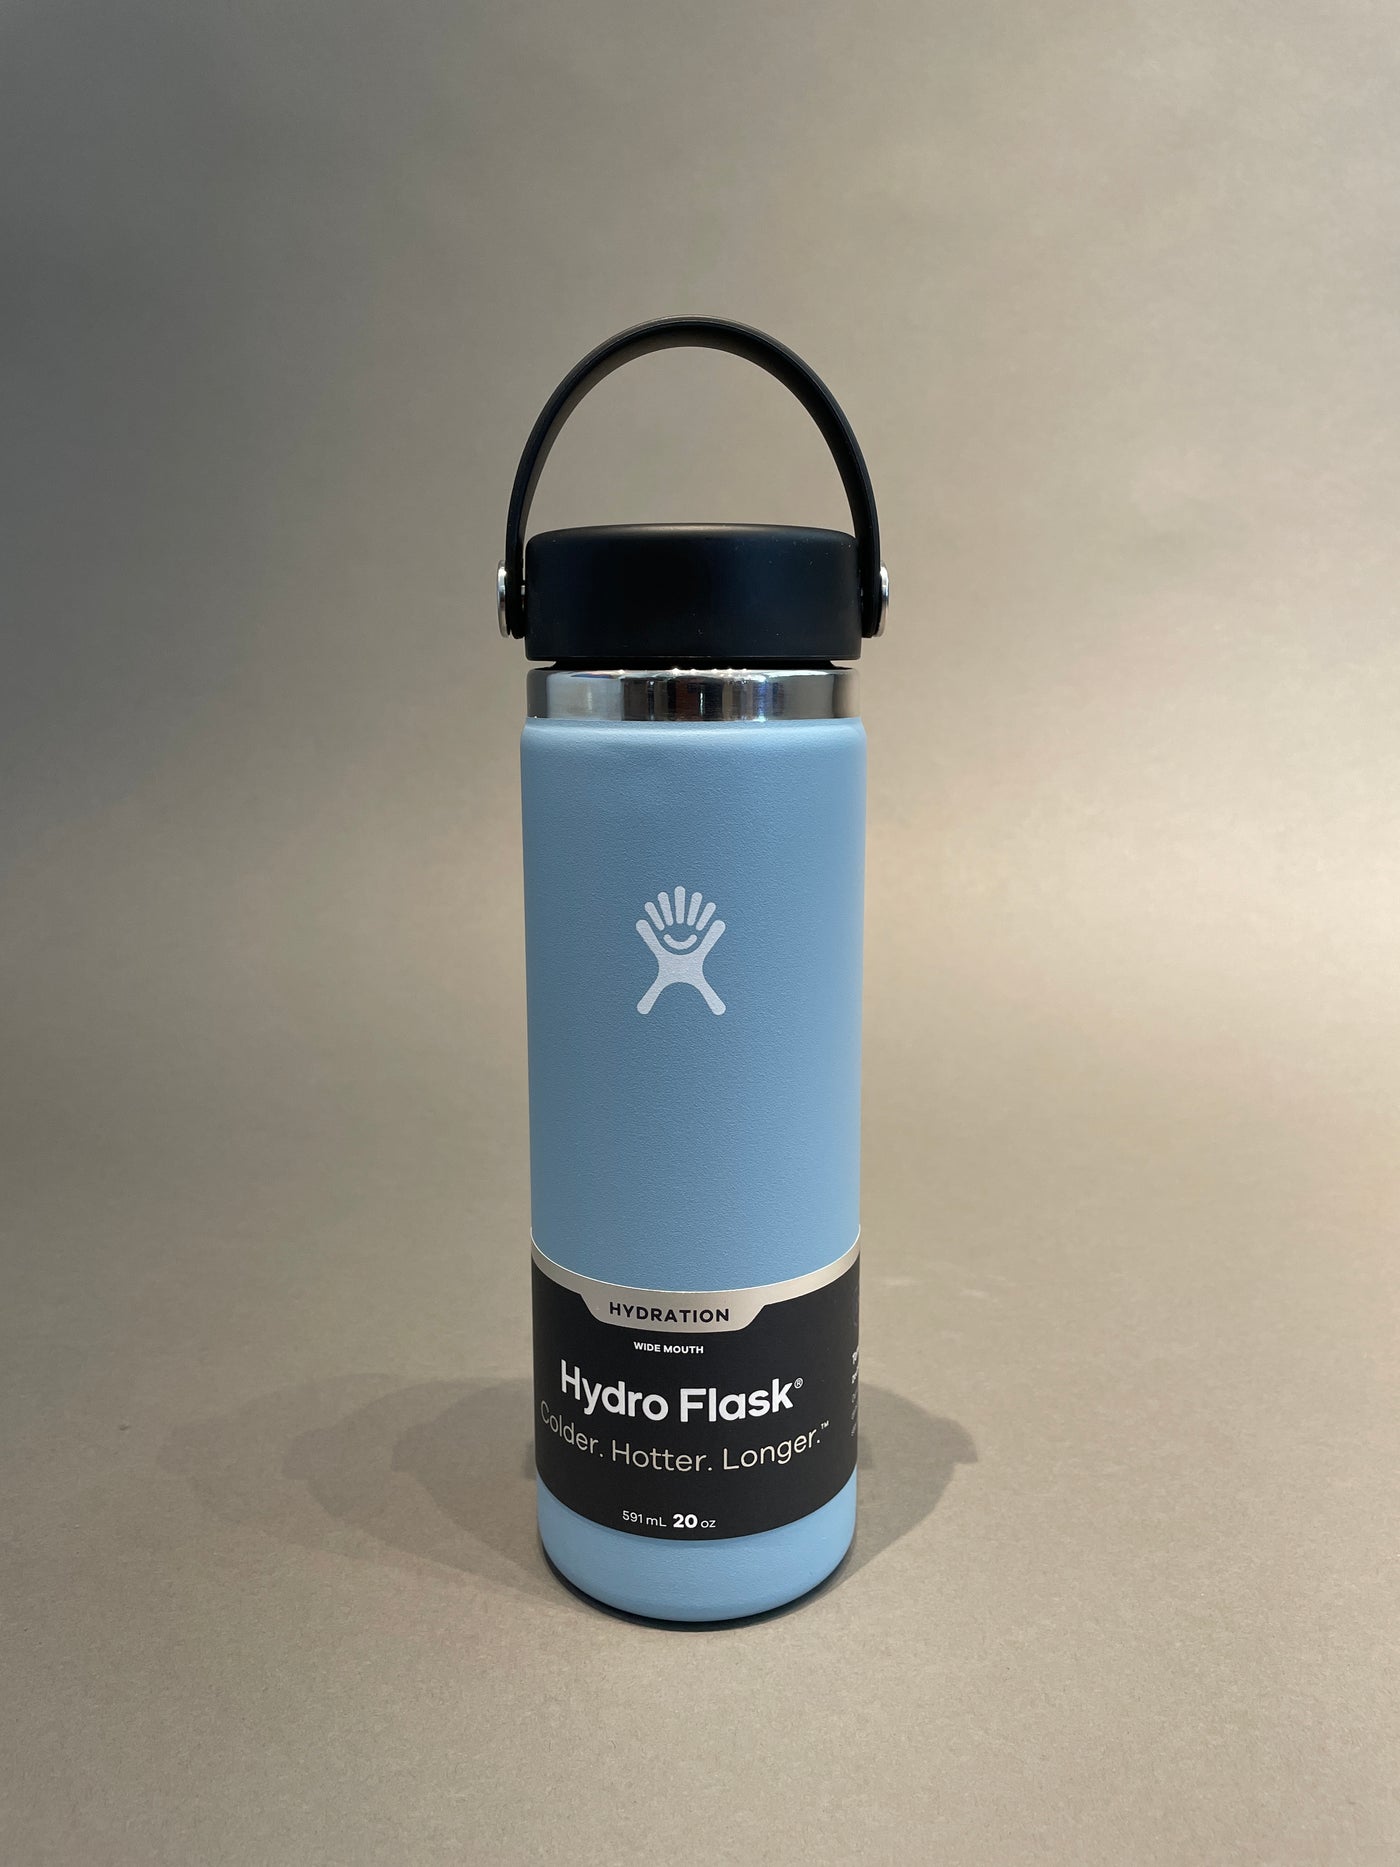 Hydro Flask 20 oz All Around Tumbler Starfish